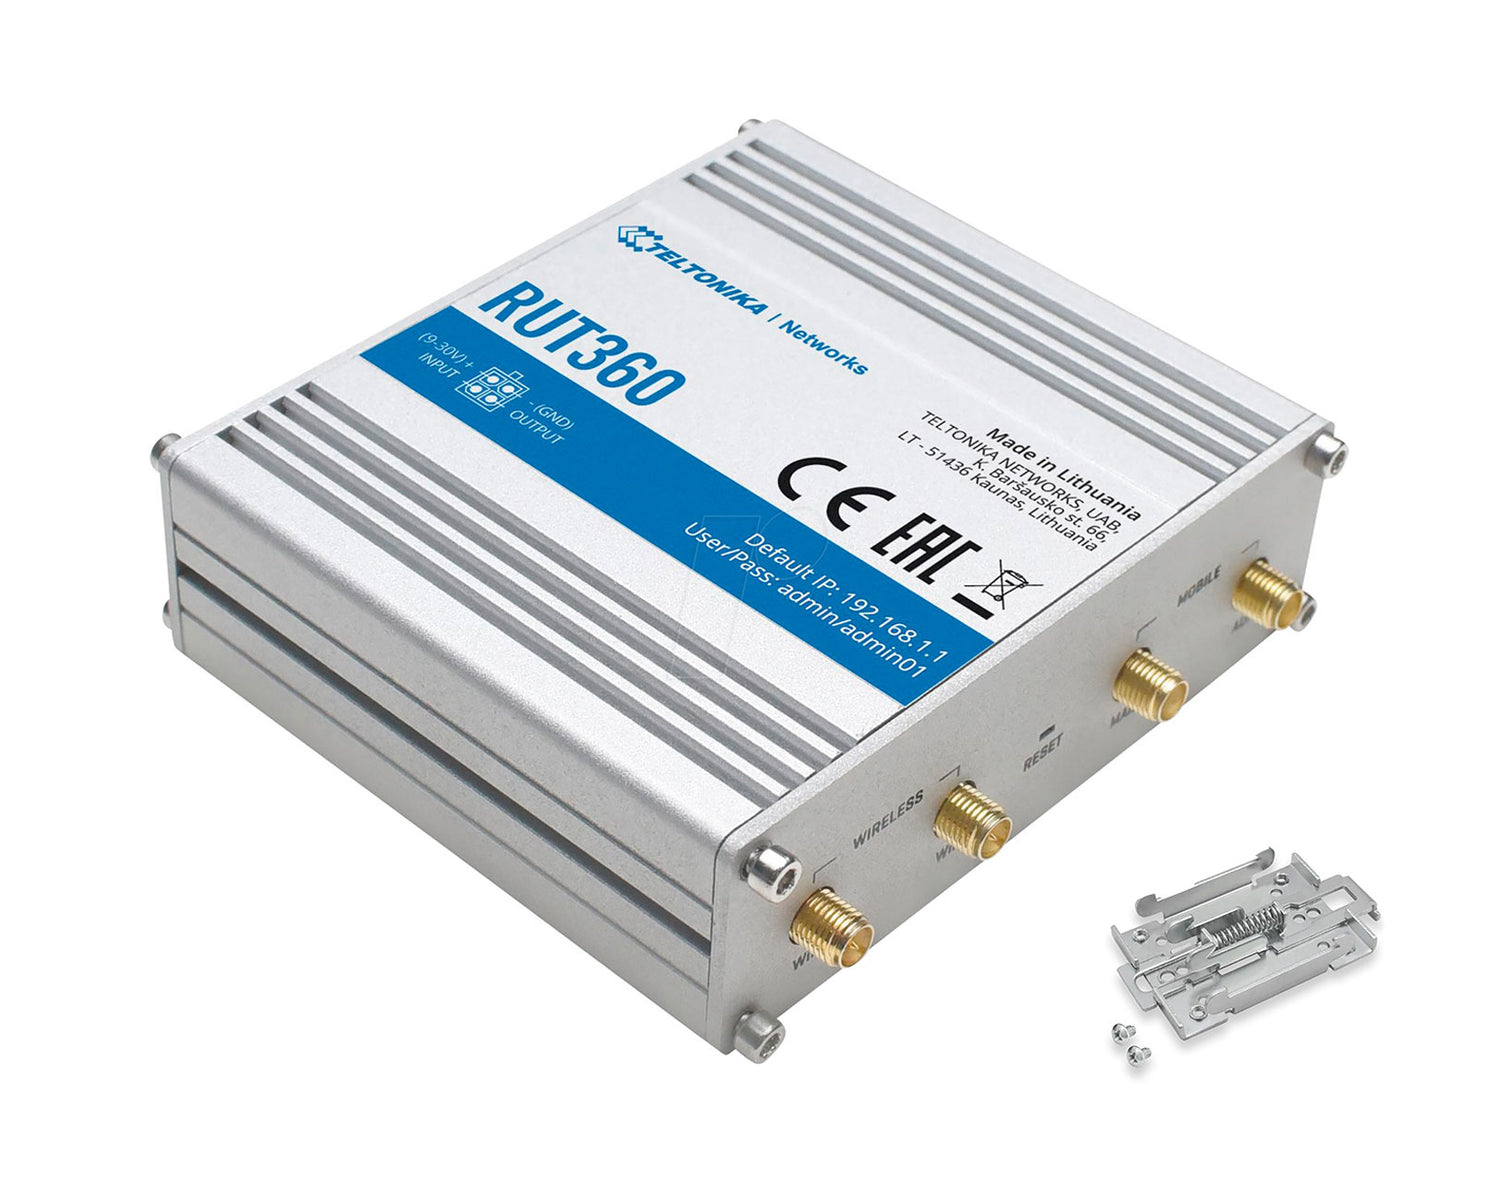 Teltonika RUT360100100 - RUT360 4G LTE CAT6 Industrial Router + WiFi